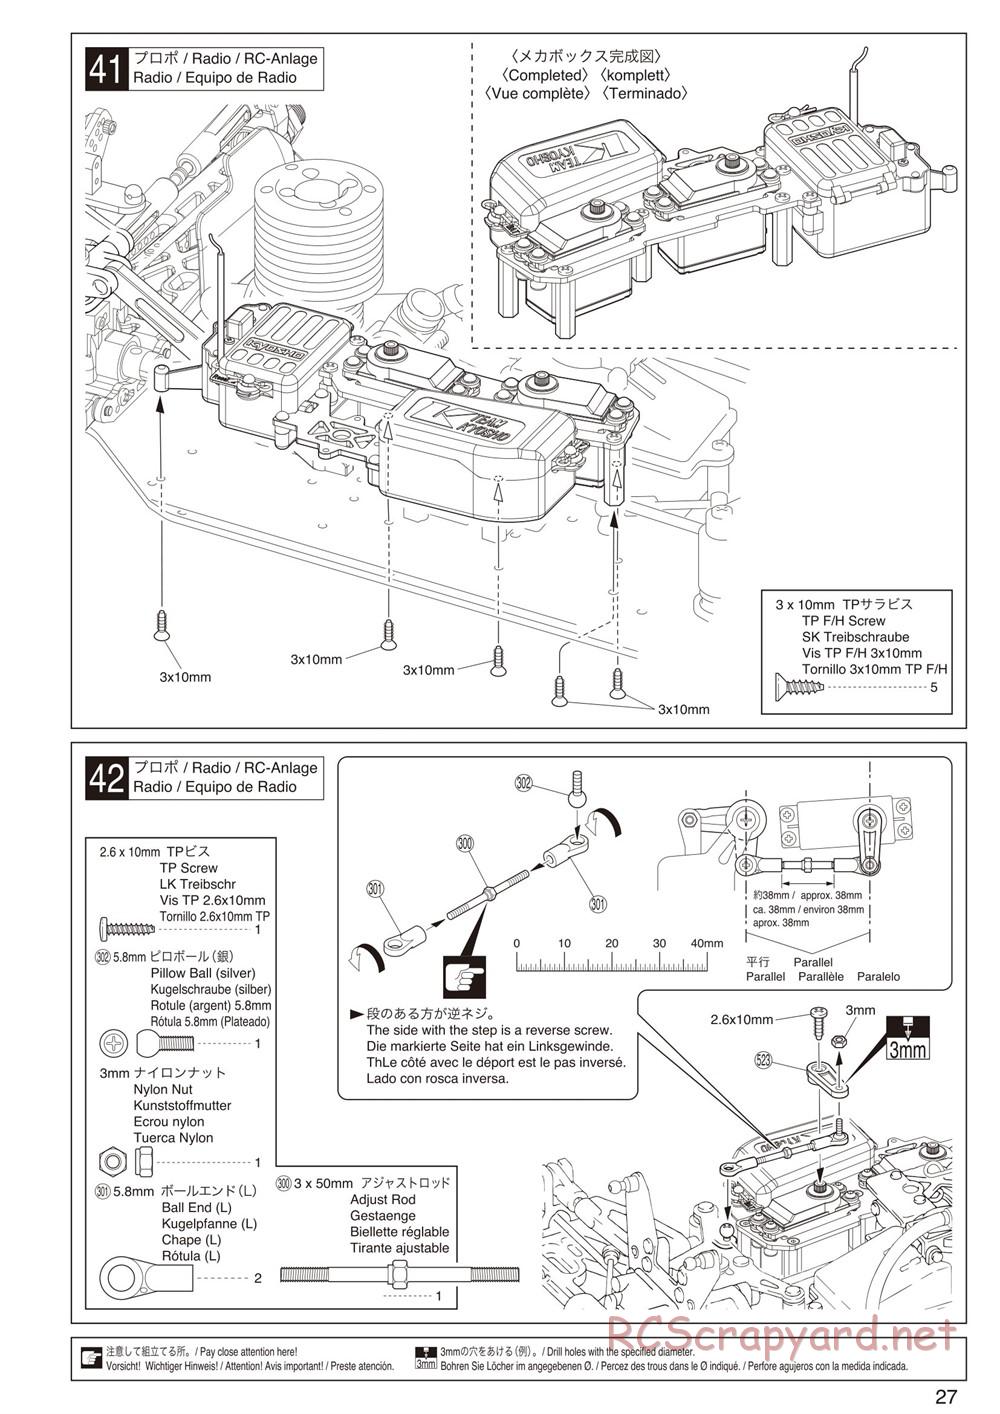 Kyosho - Inferno NEO ST Race Spec - Manual - Page 27